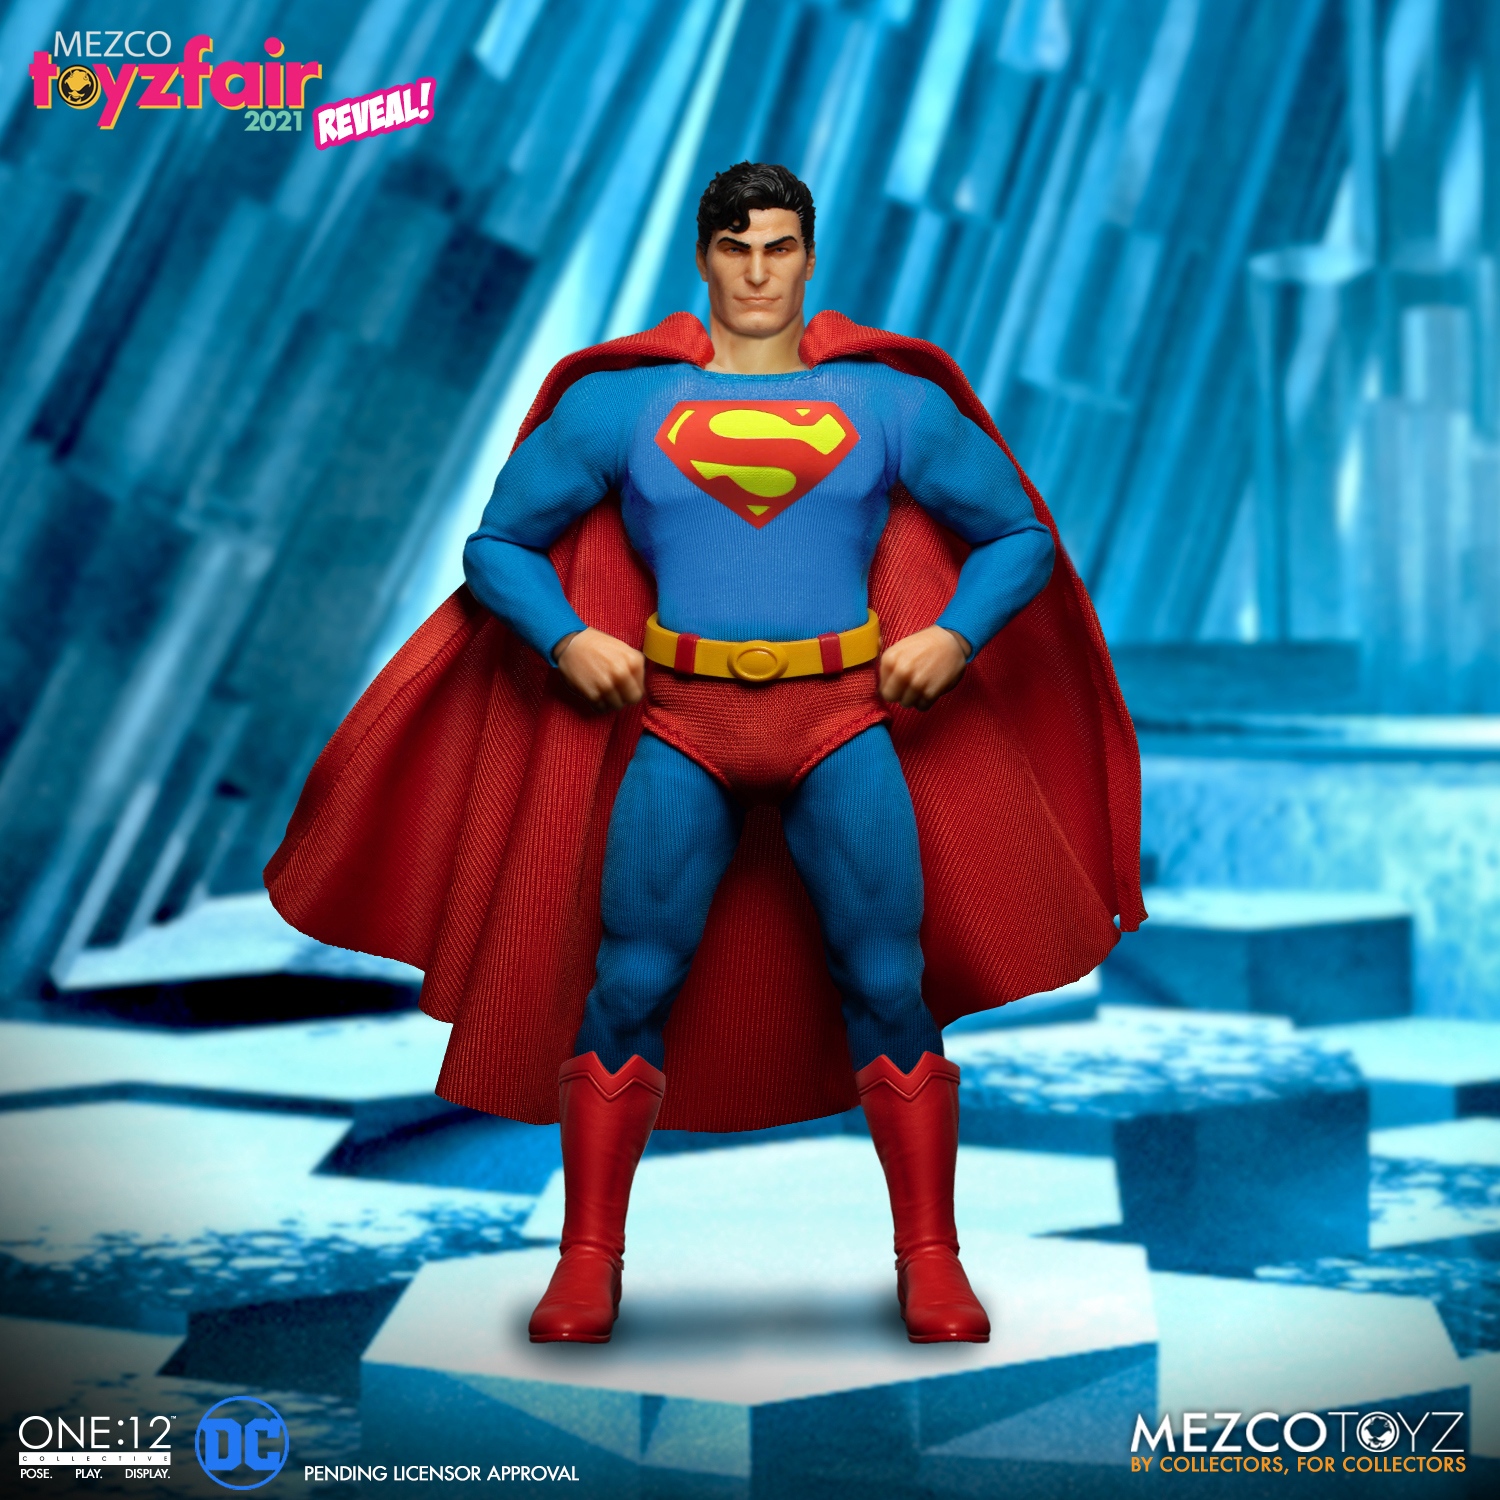 Mezco Superman One:12 Collective Figure